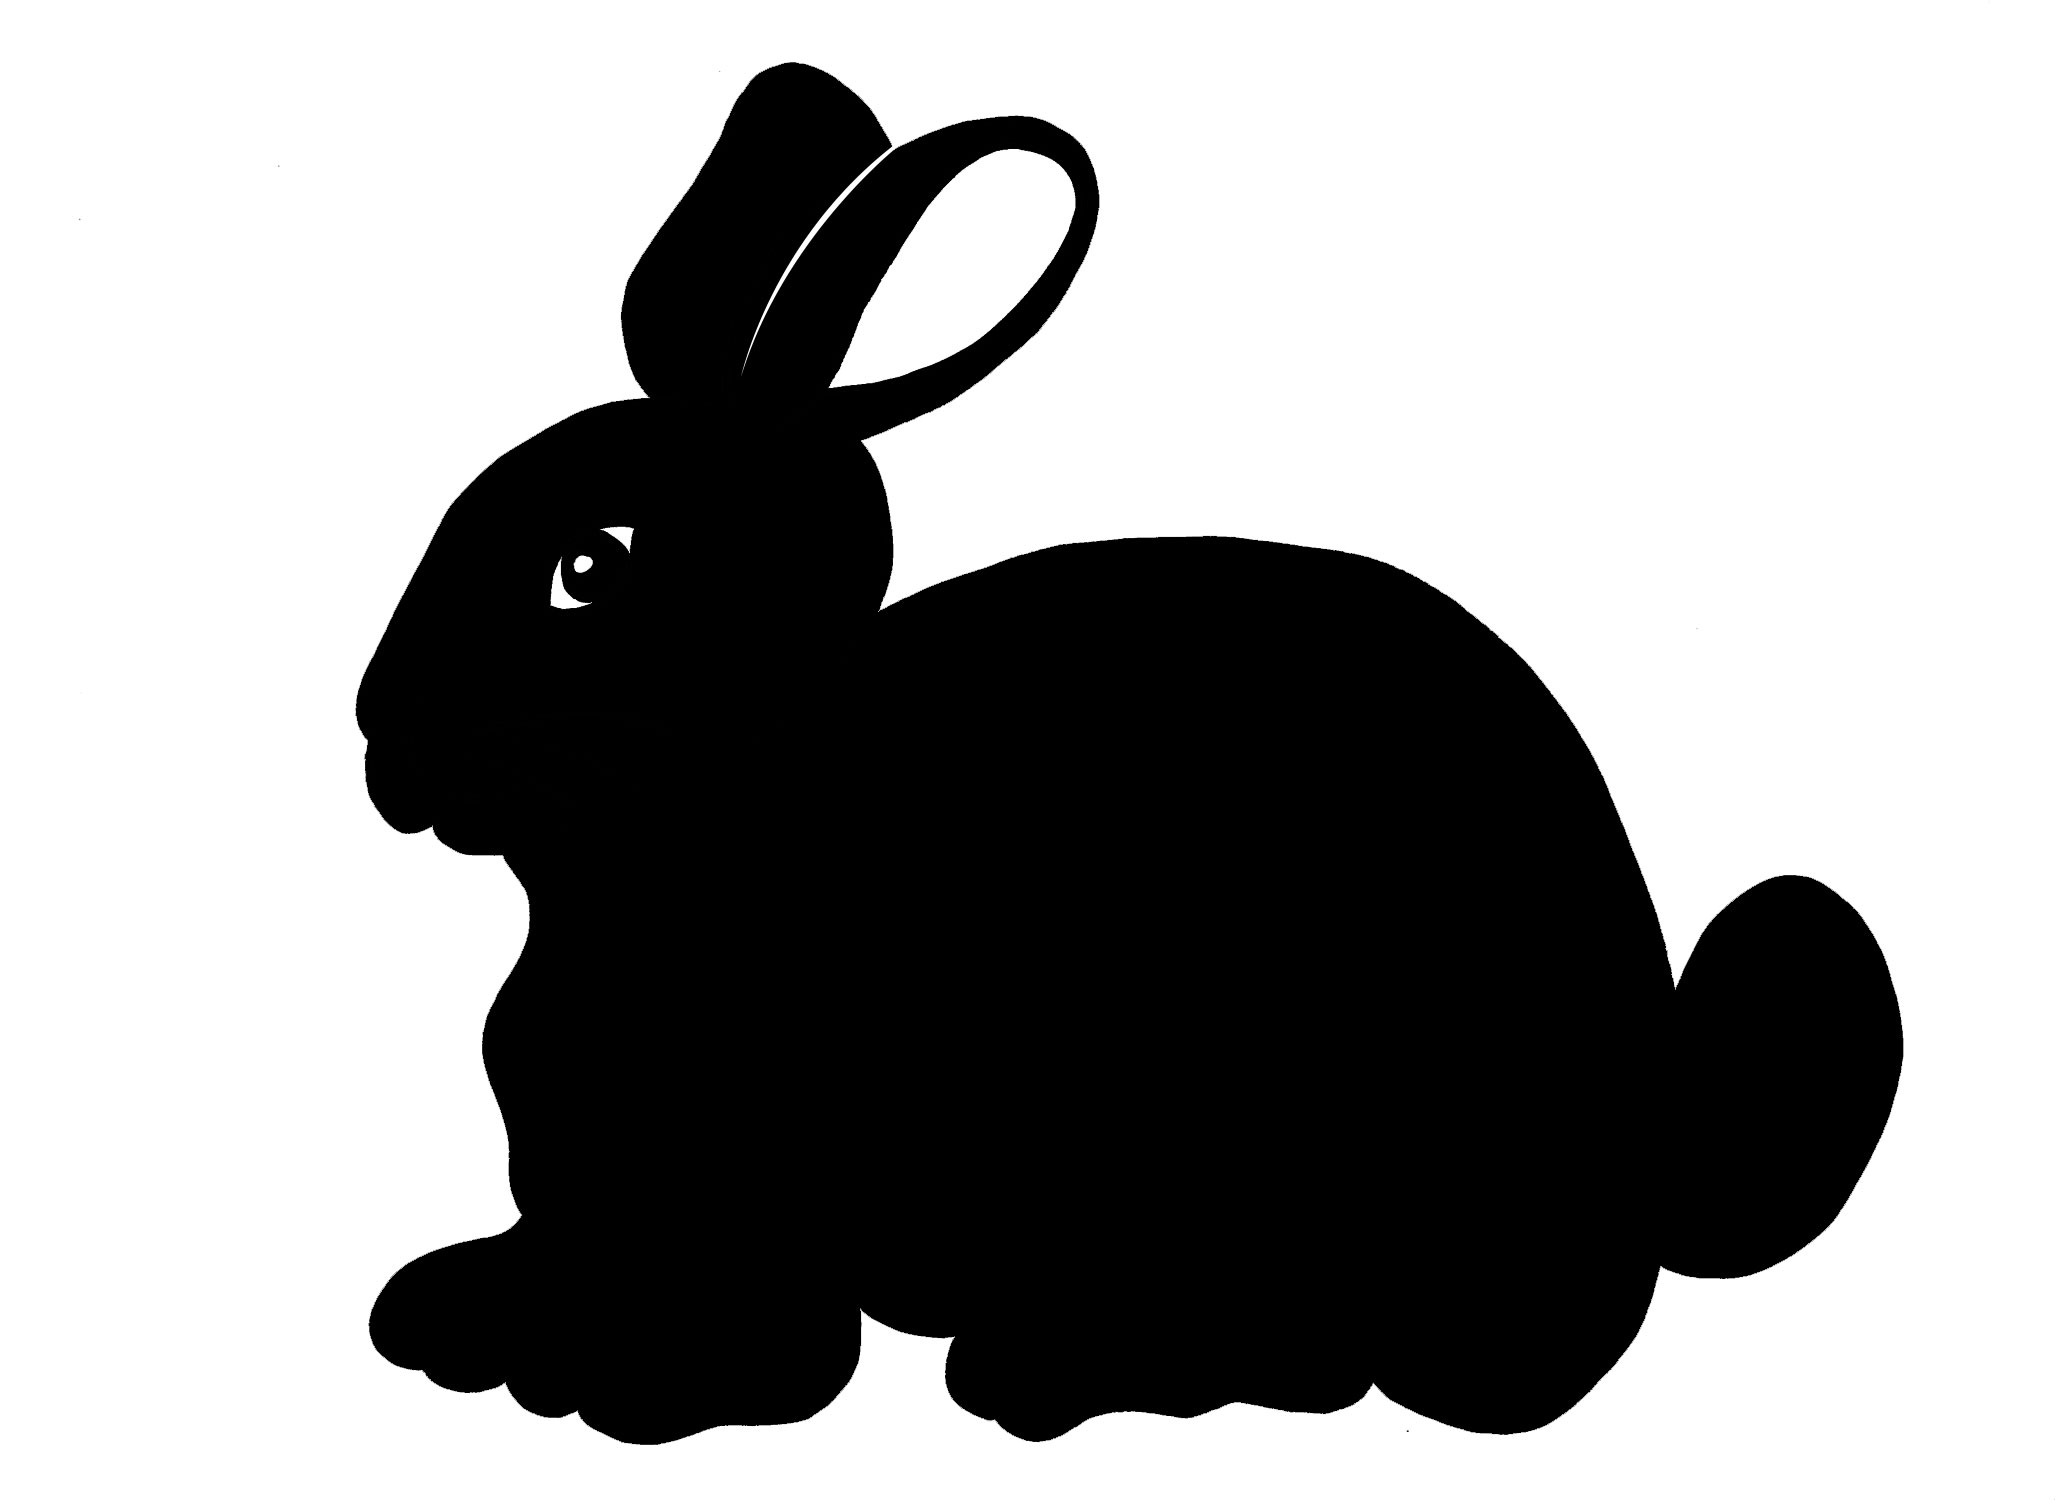 Easter bunny head silhouette clipart - ClipartFox